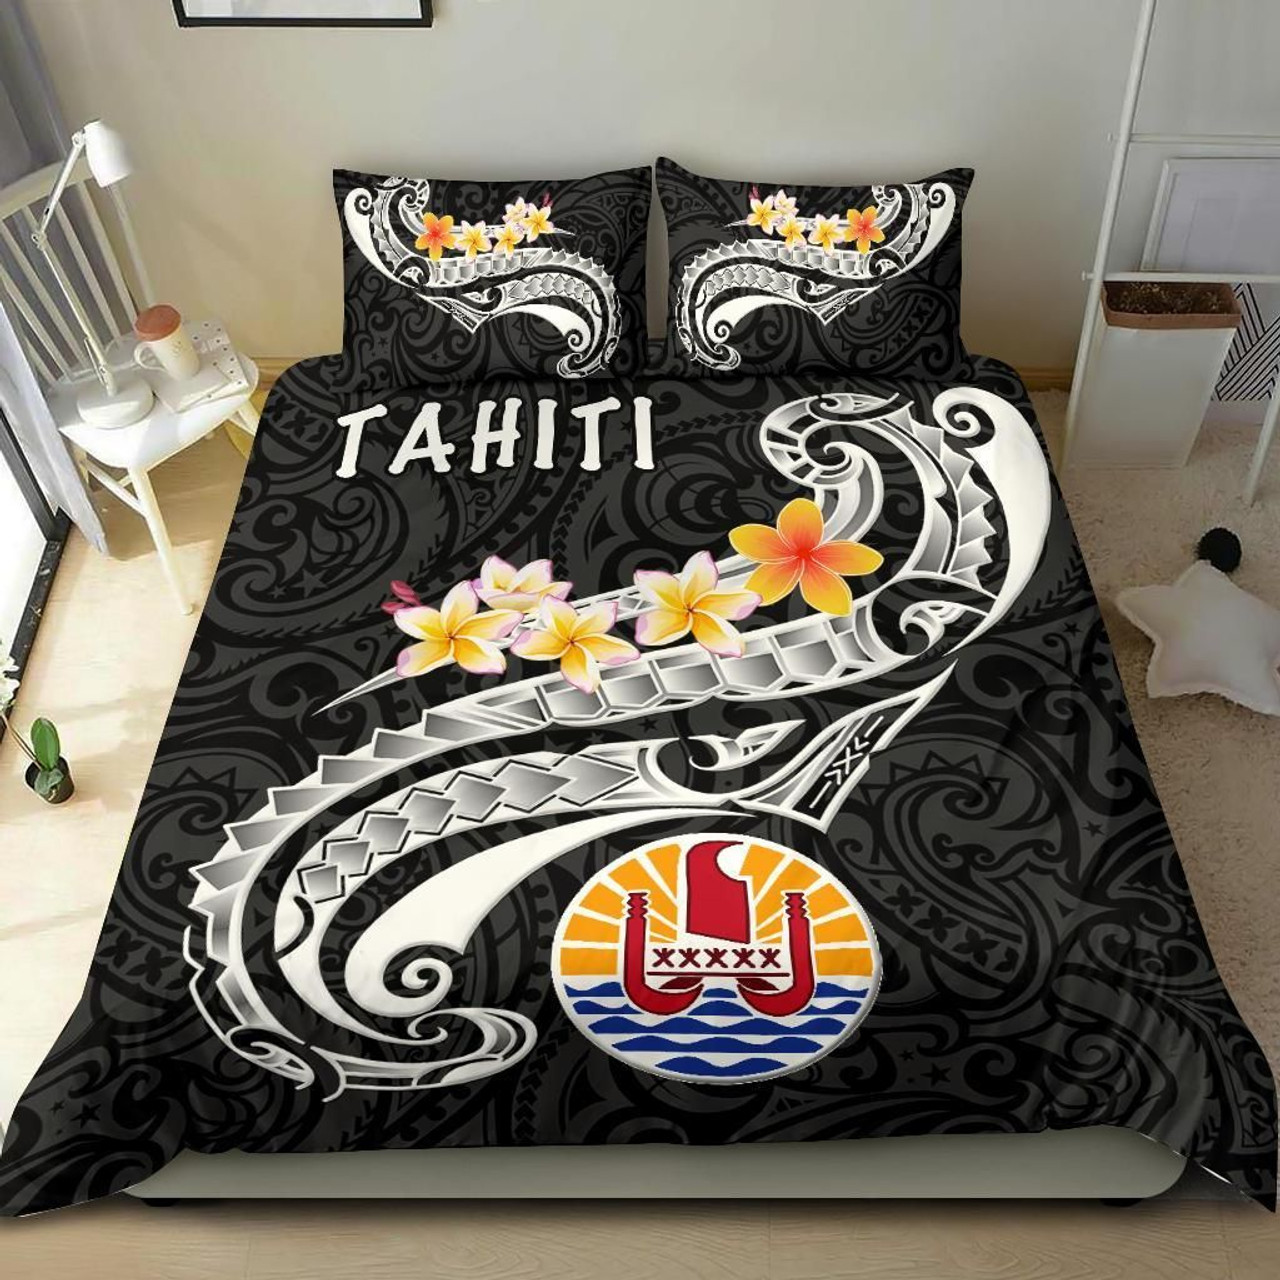 Tahiti Bedding Set - Tahiti Seal Polynesian Patterns Plumeria (Black) 2